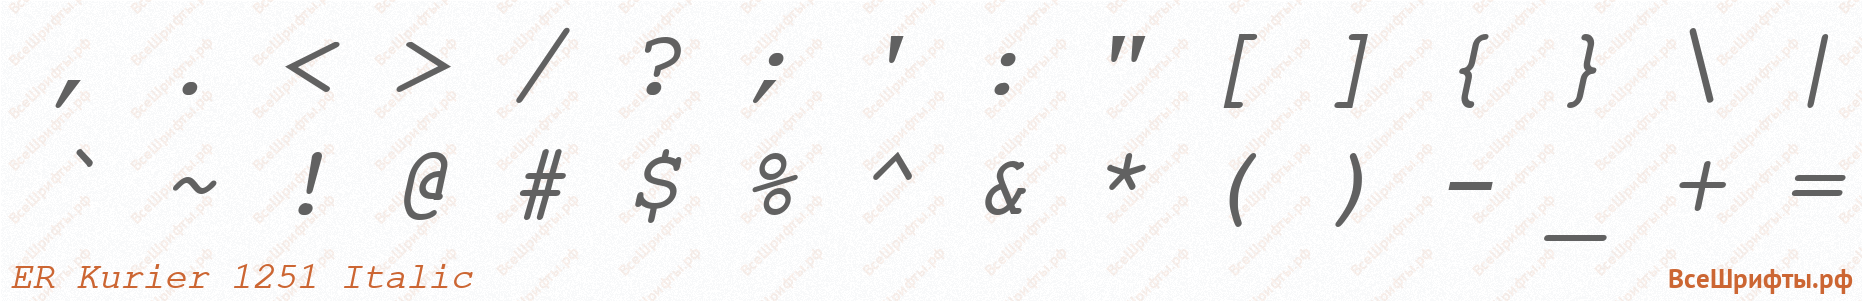 Шрифт ER Kurier 1251 Italic со знаками препинания и пунктуации